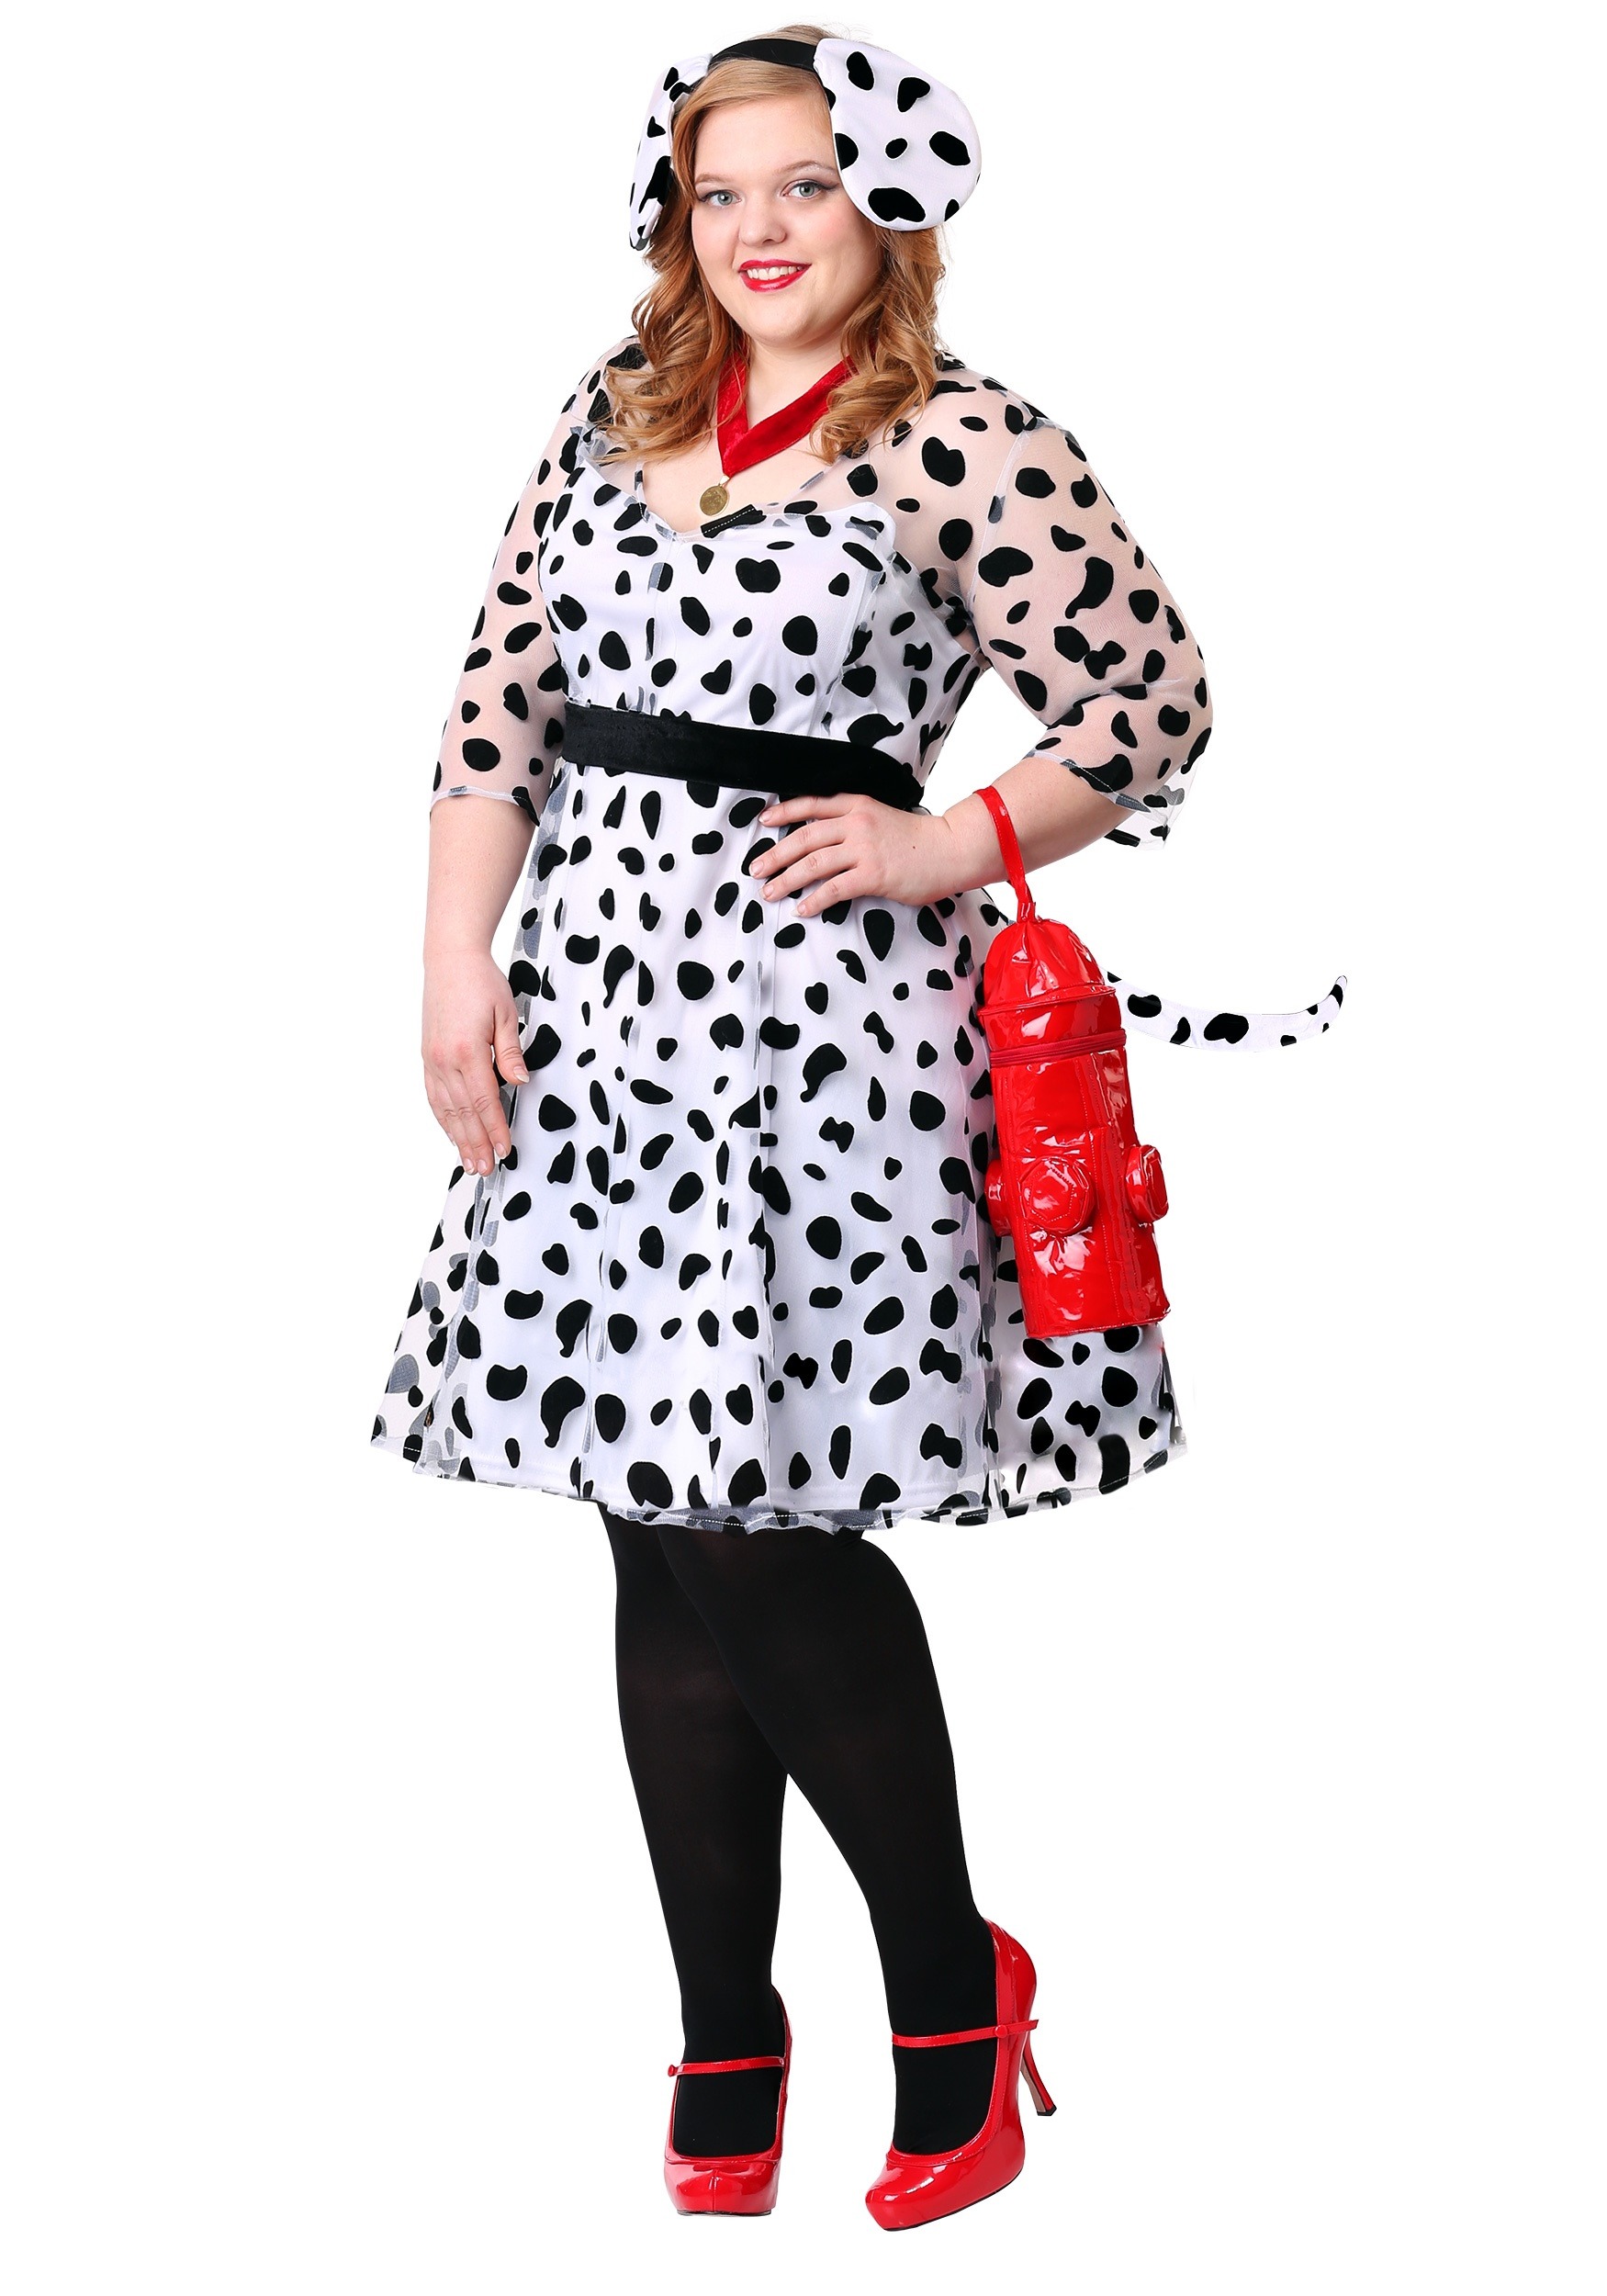 Plus Size Women's Dressy Dalmatian Costume